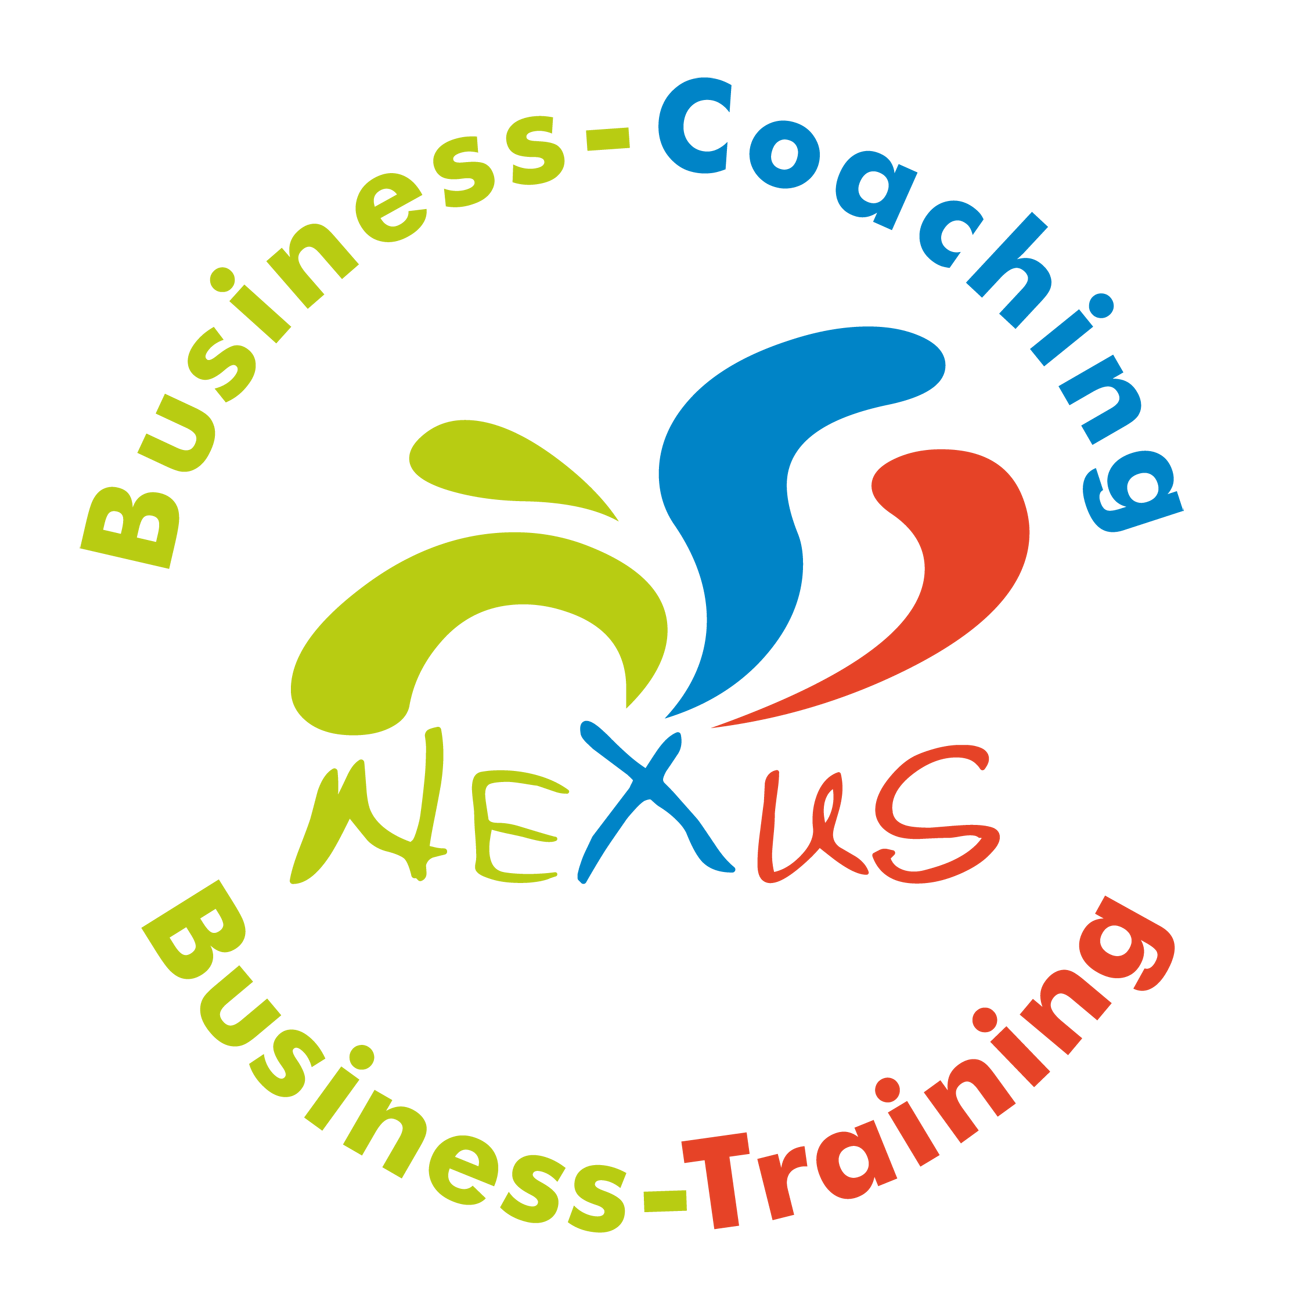 Business-Coaching Floersheim, Führungskräfte-Coaching, Führungskräftetraining, Persönlichkeitstraining